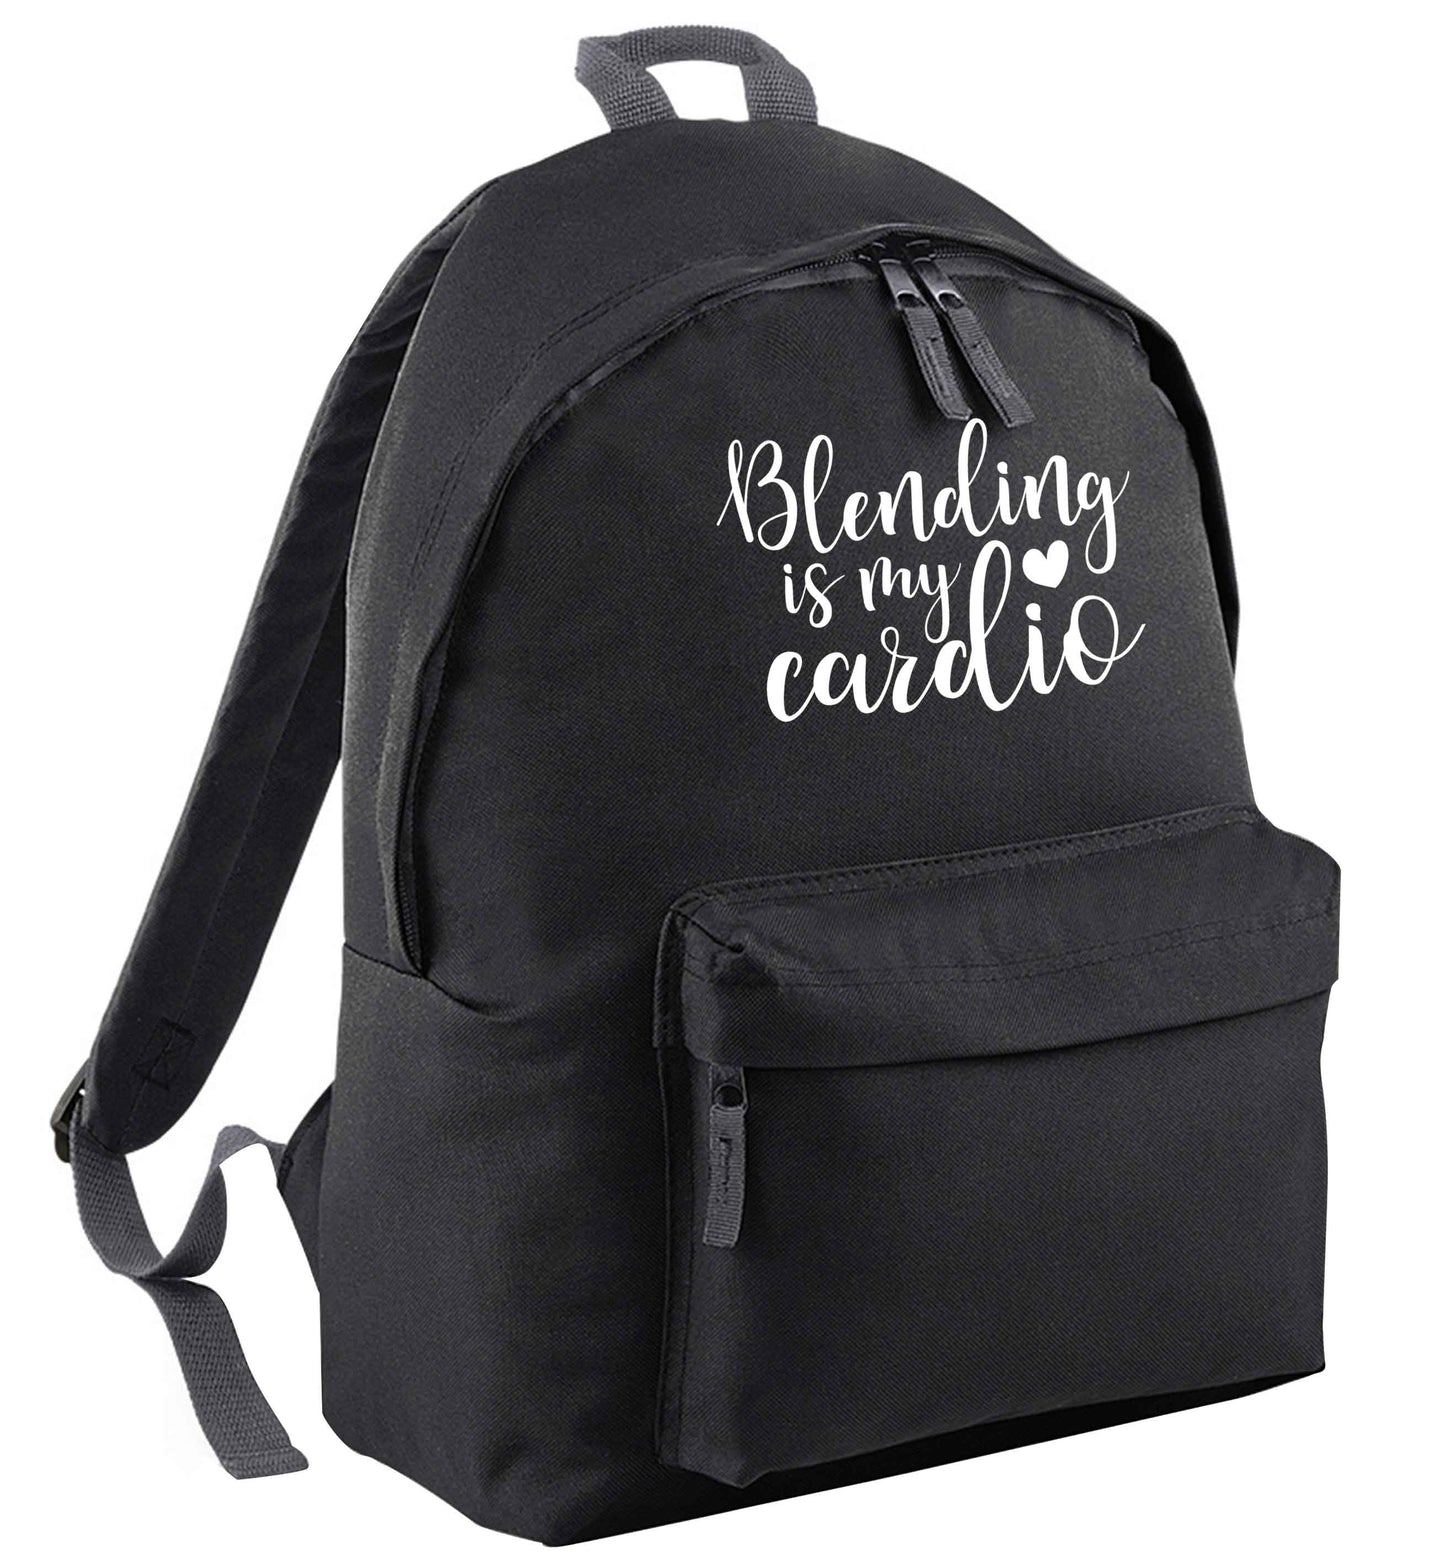 Blending is my cardio black adults backpack